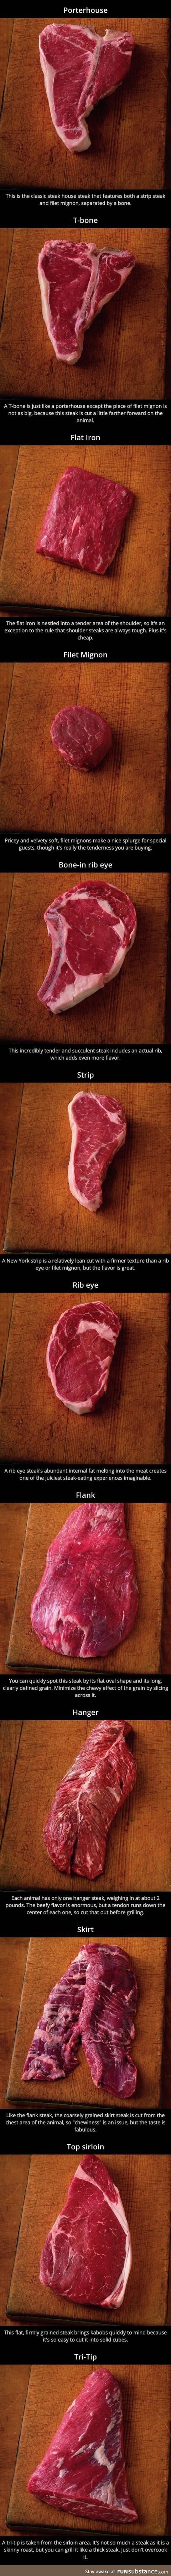 Know your steak